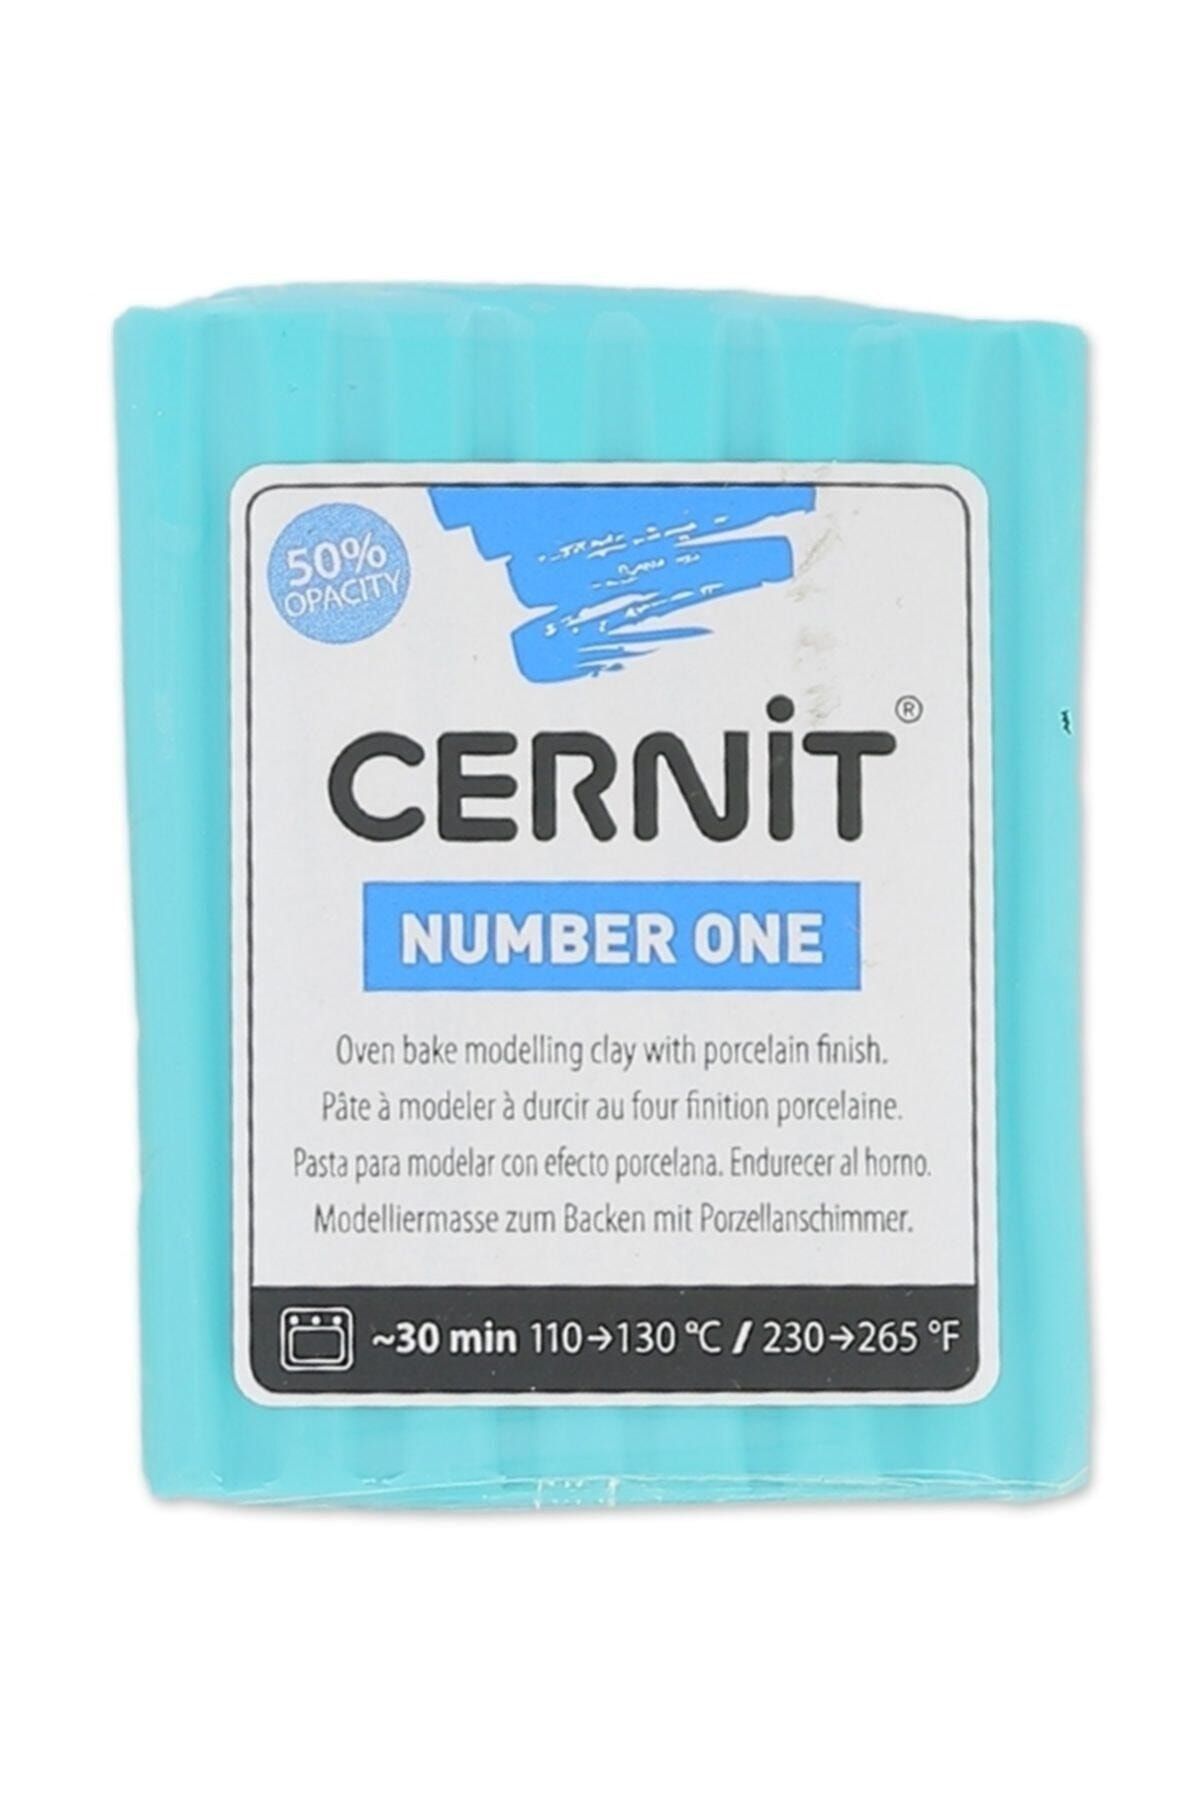 Cernit Number One Polimer Kil 56g 280 Turquoise